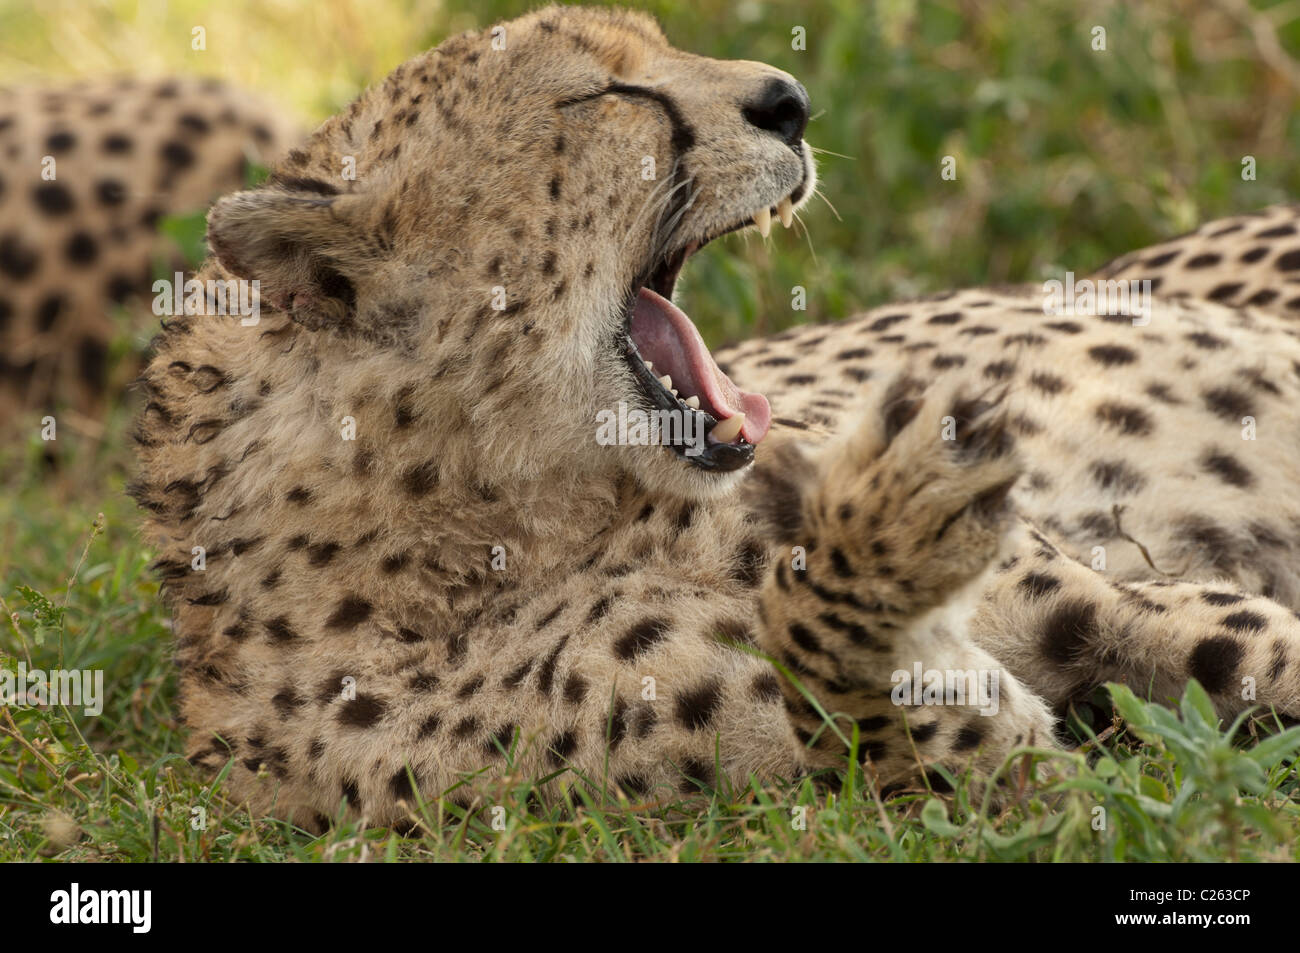 Stock photo of a cheetah yawning. Stock Photo